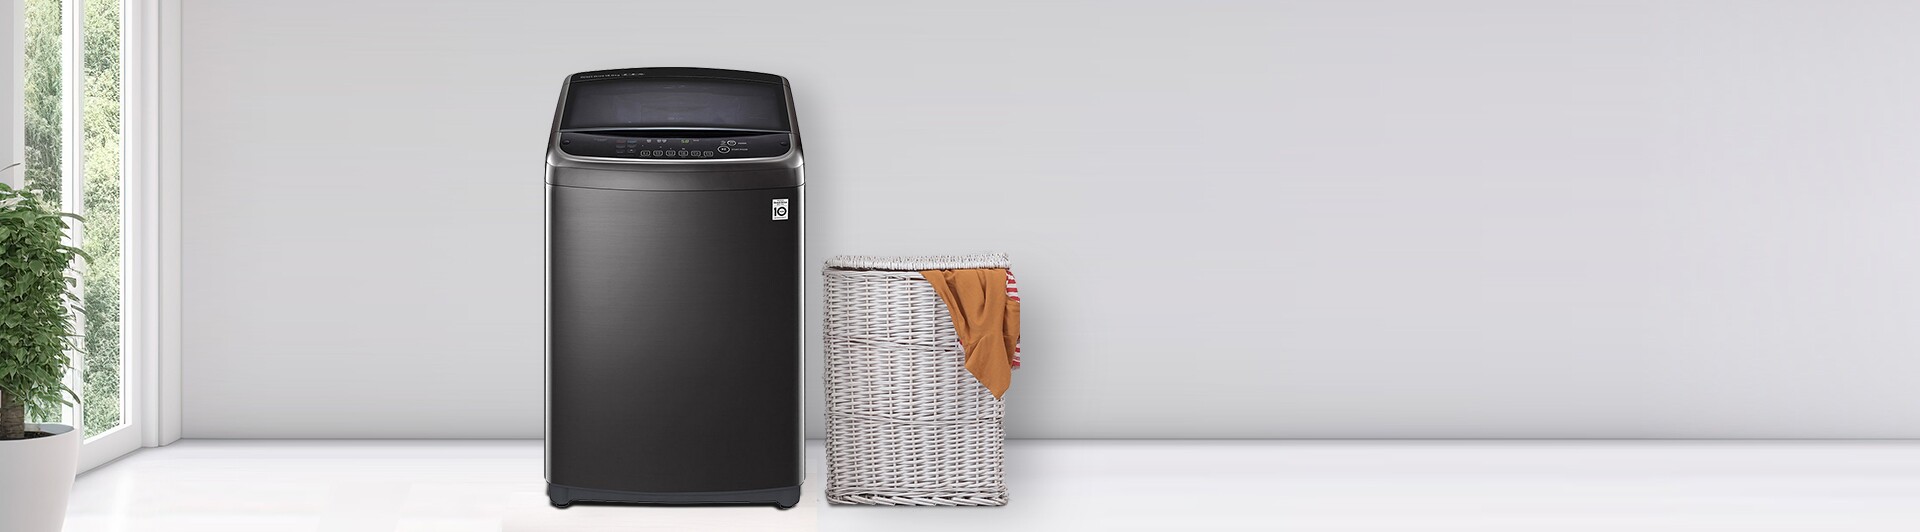 Máy giặt LG Inverter 22 kg TH2722SSAK